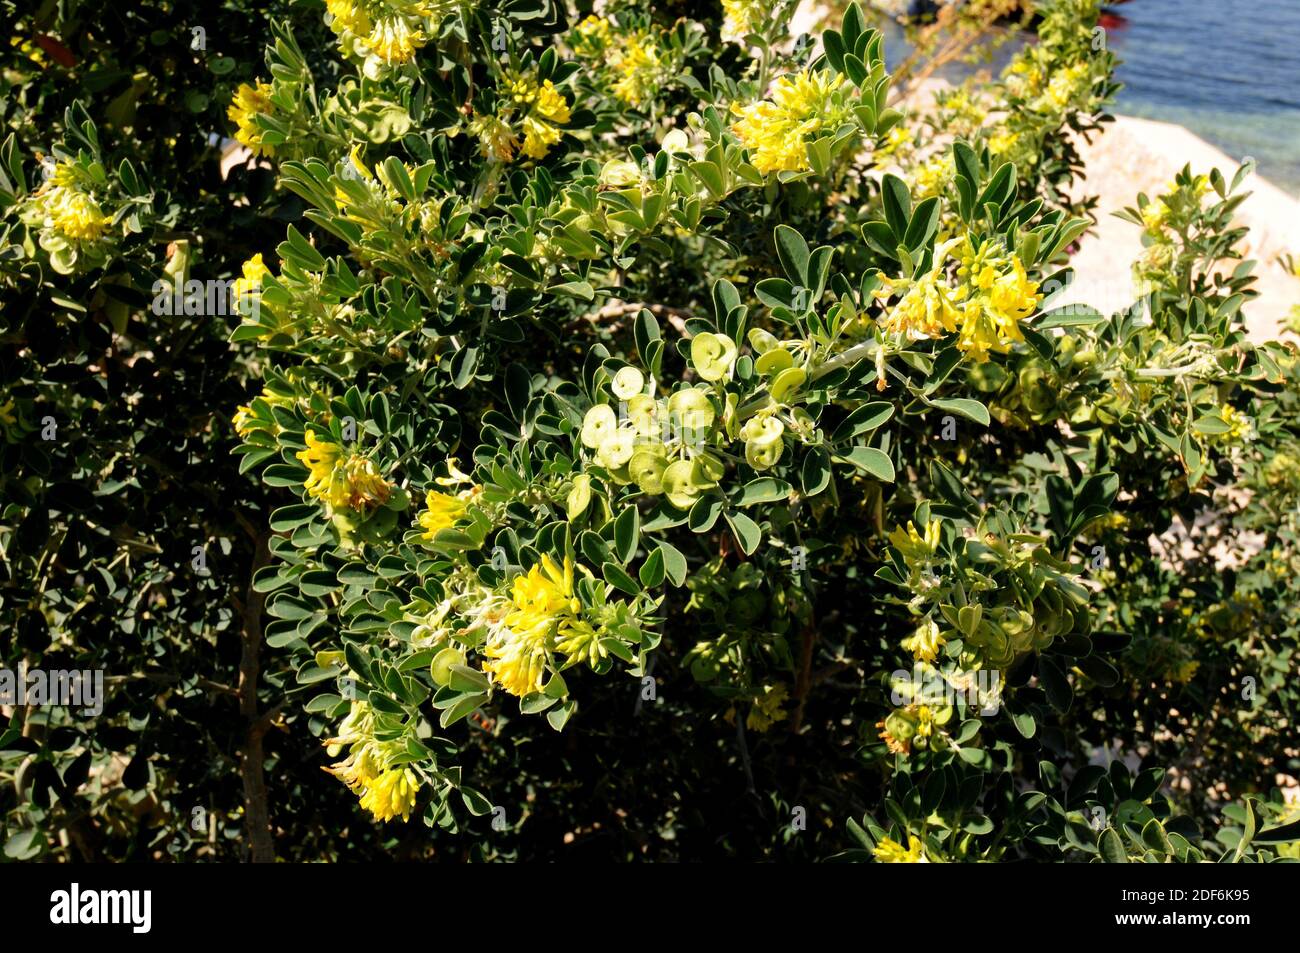 Alfalfa arborea (Medicago citrina or Medicago arborea citrina) is an endangered species of shrub endemic to Columbrets Islands and some Balearic Stock Photo